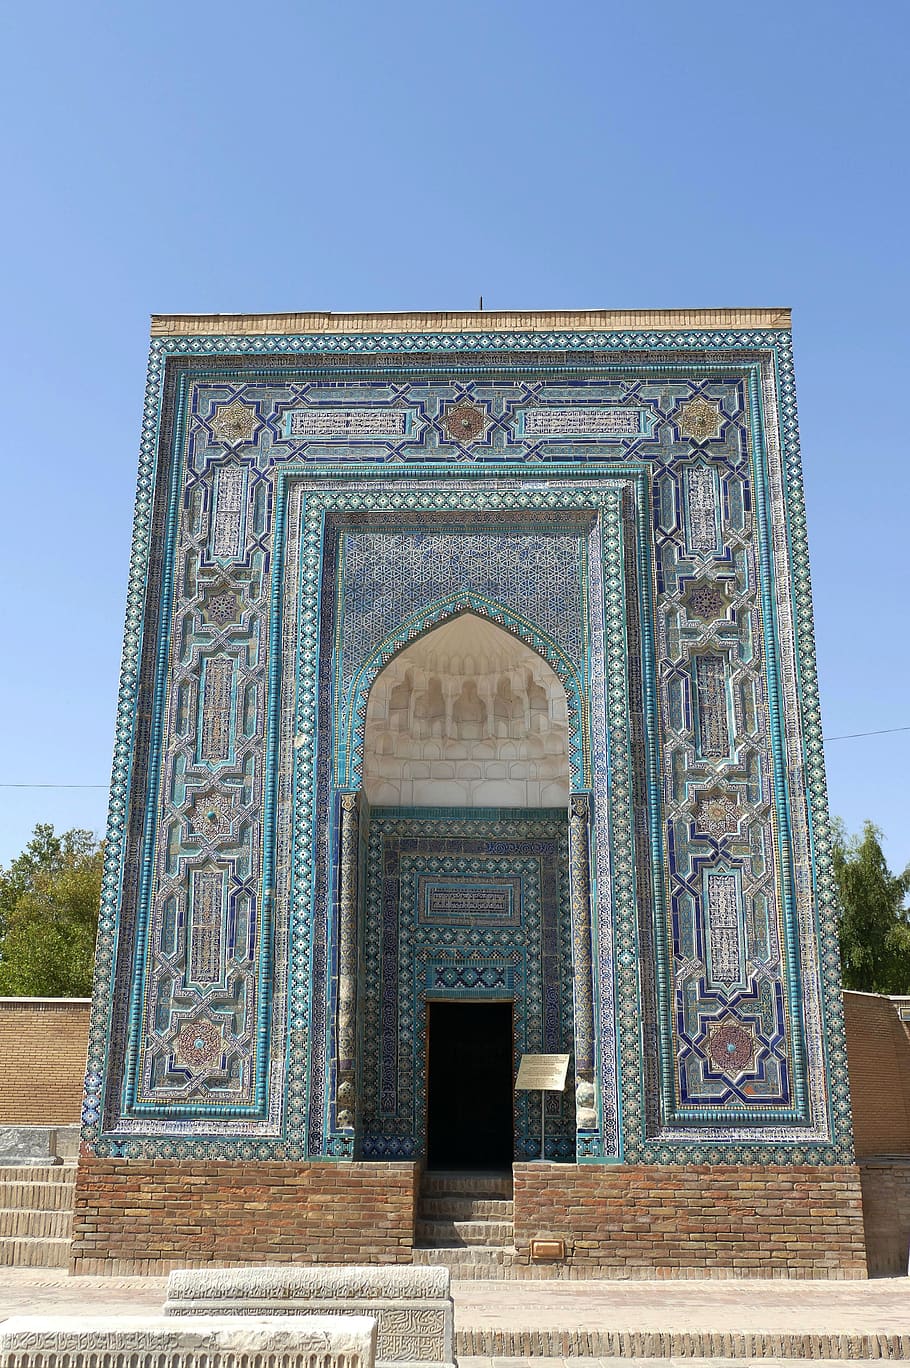 samarcanda, uzbekistán, arquitectura, asia central, ruta de la seda, históricamente, sitio del patrimonio mundial, patrimonio mundial, centro histórico, unesco